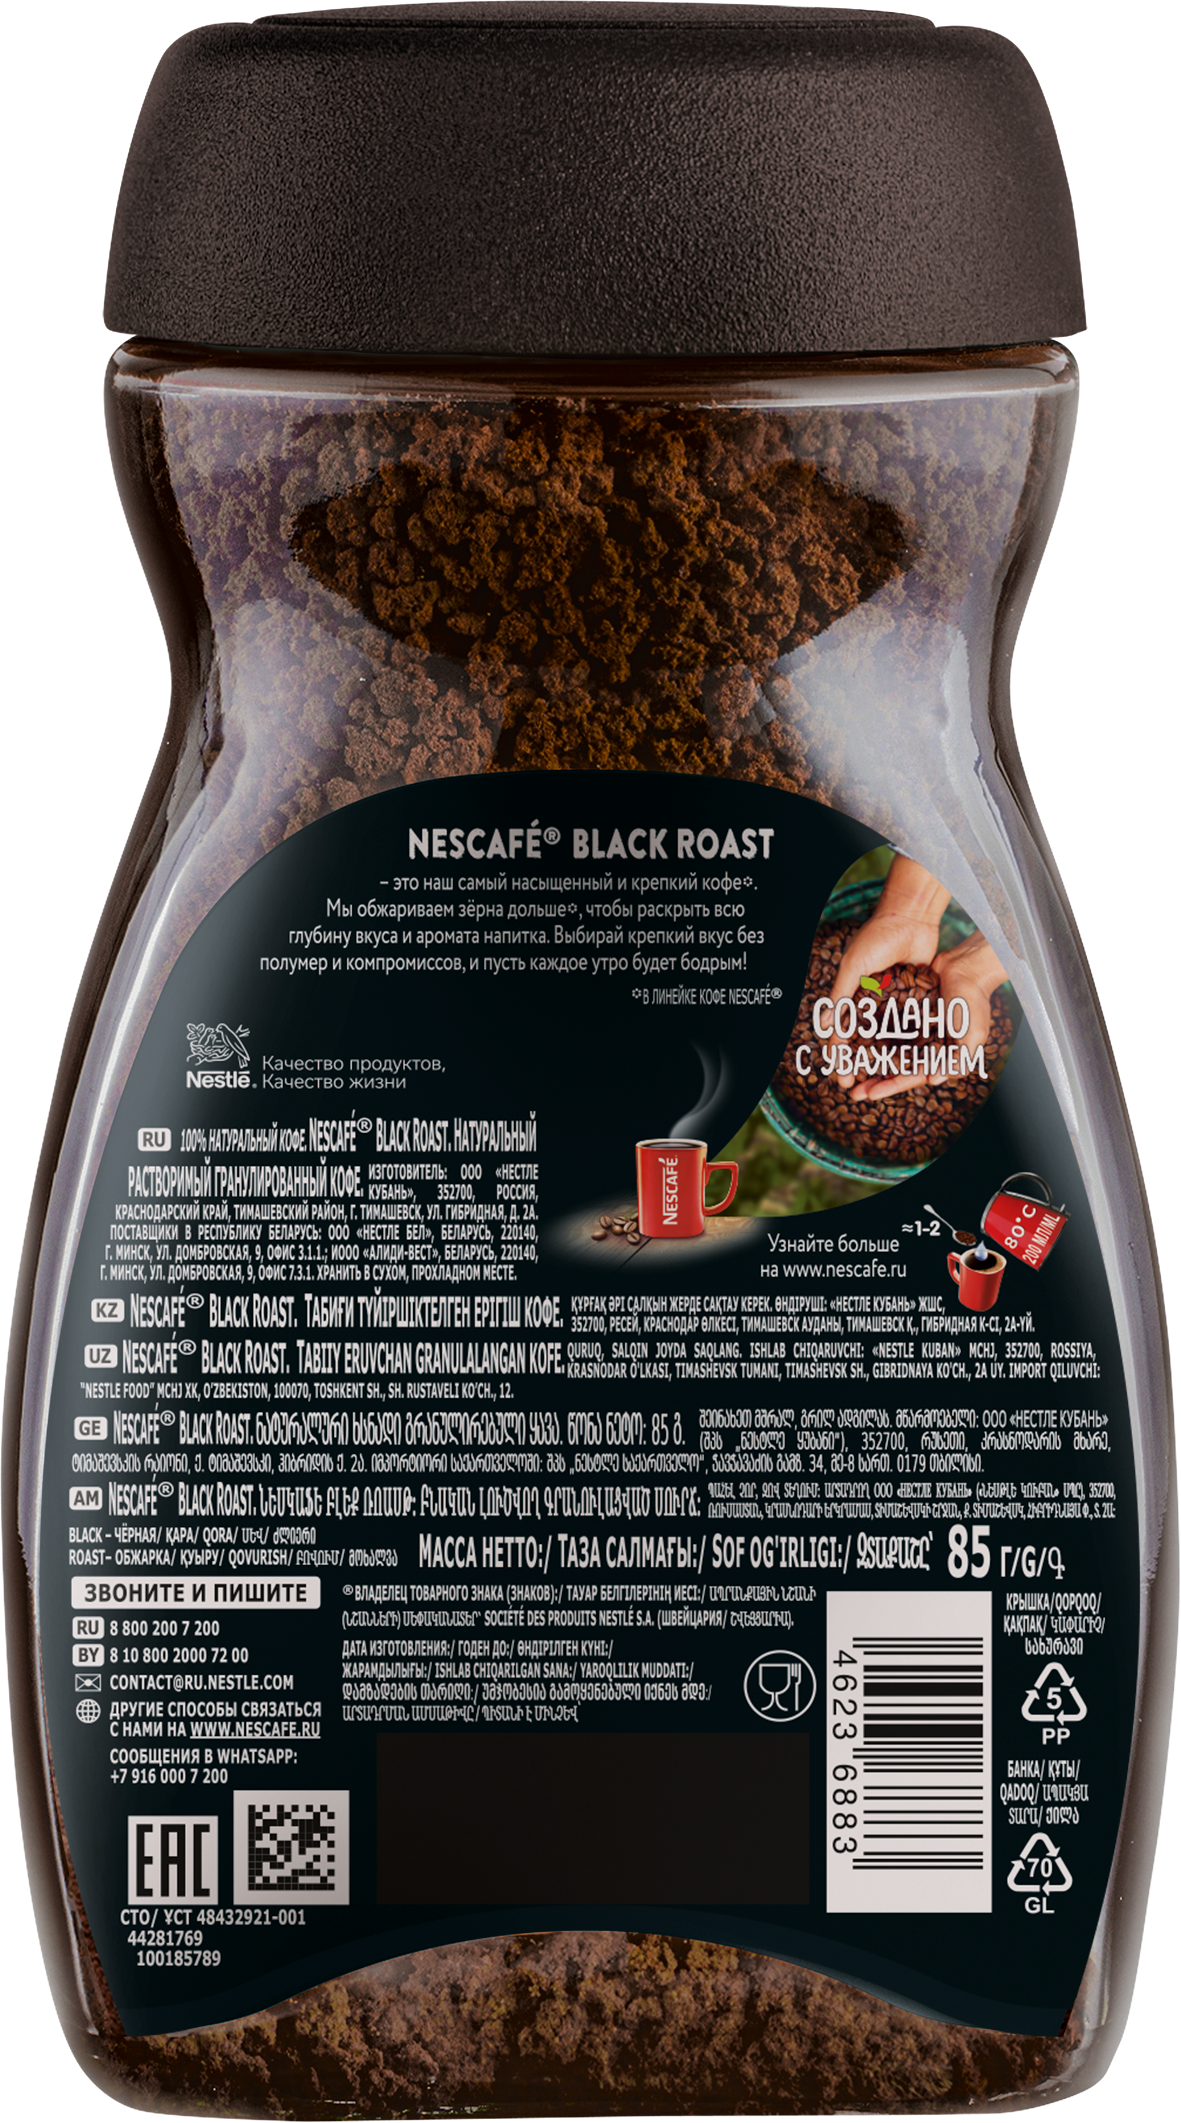 Nescafe_Black_Roast-85g_brown_back